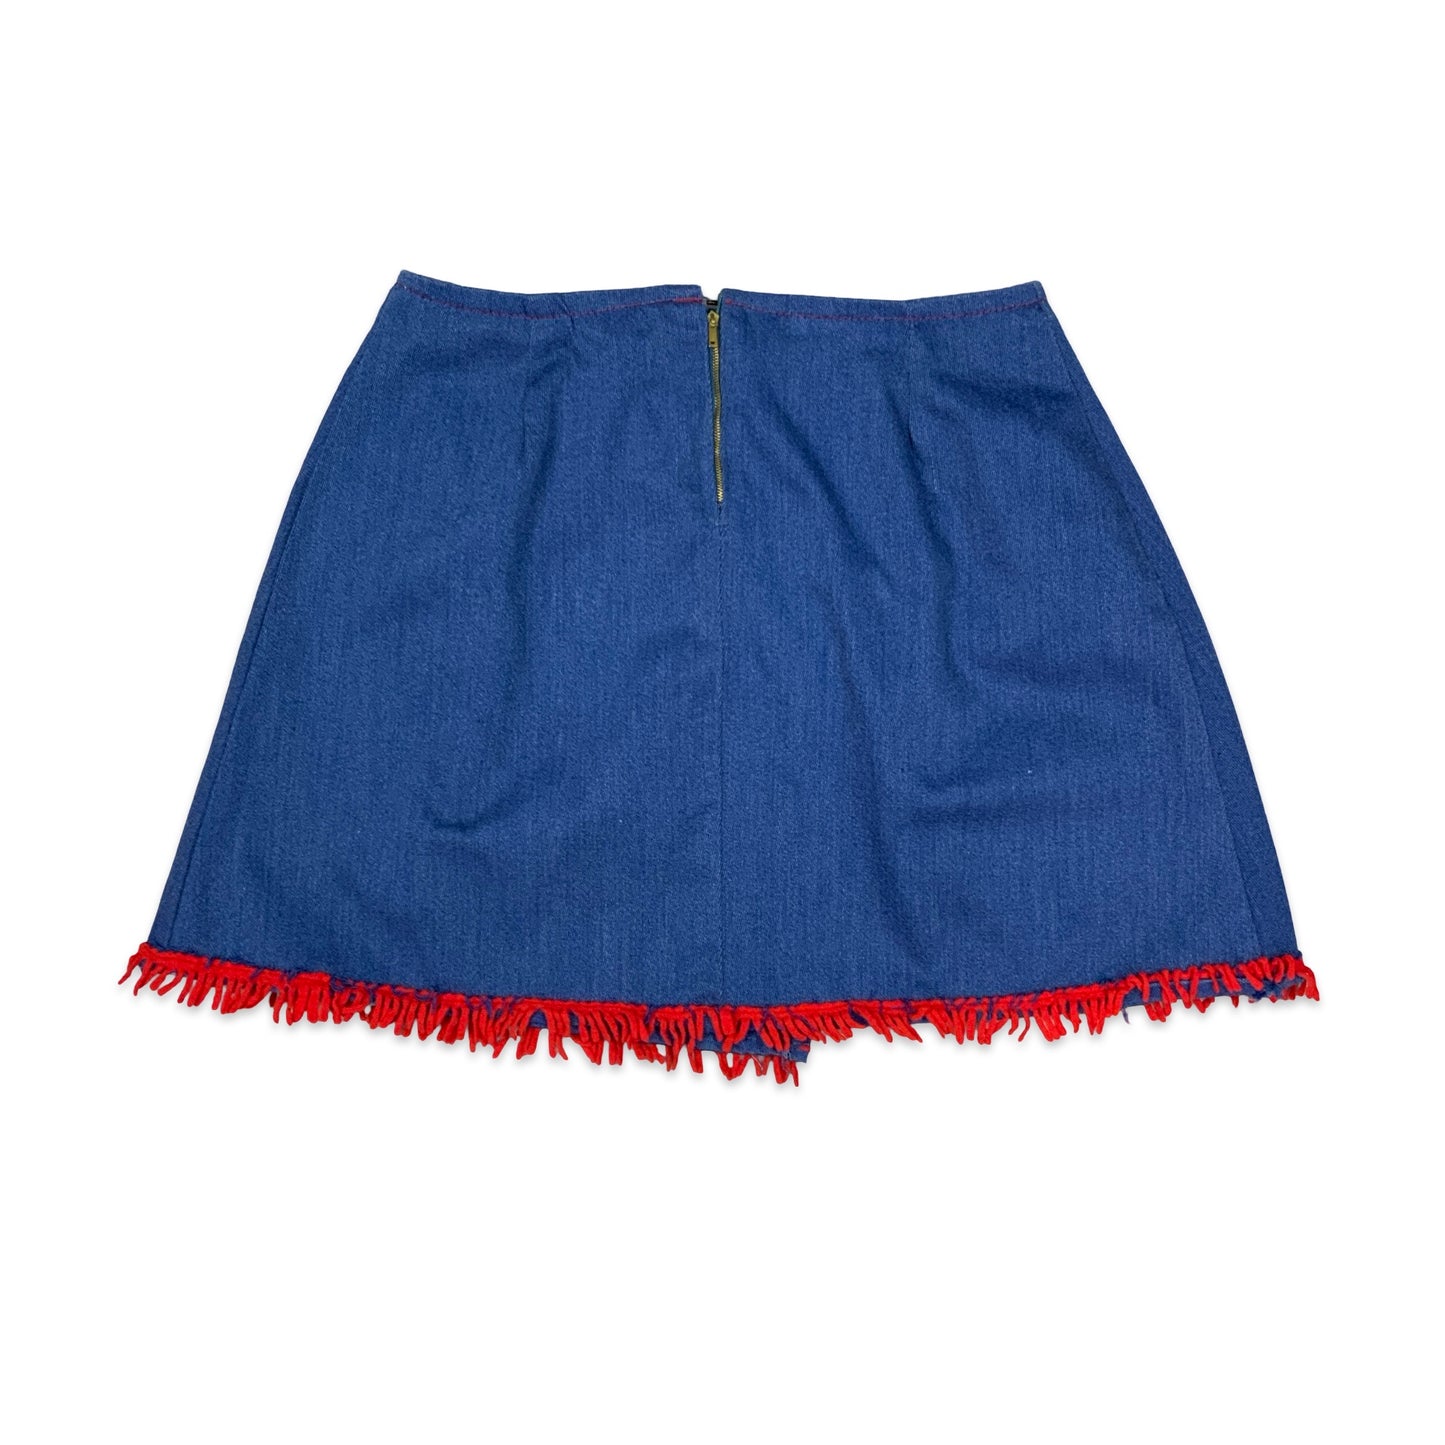 Vintage Denim Mini Skirt with Red Trim 8